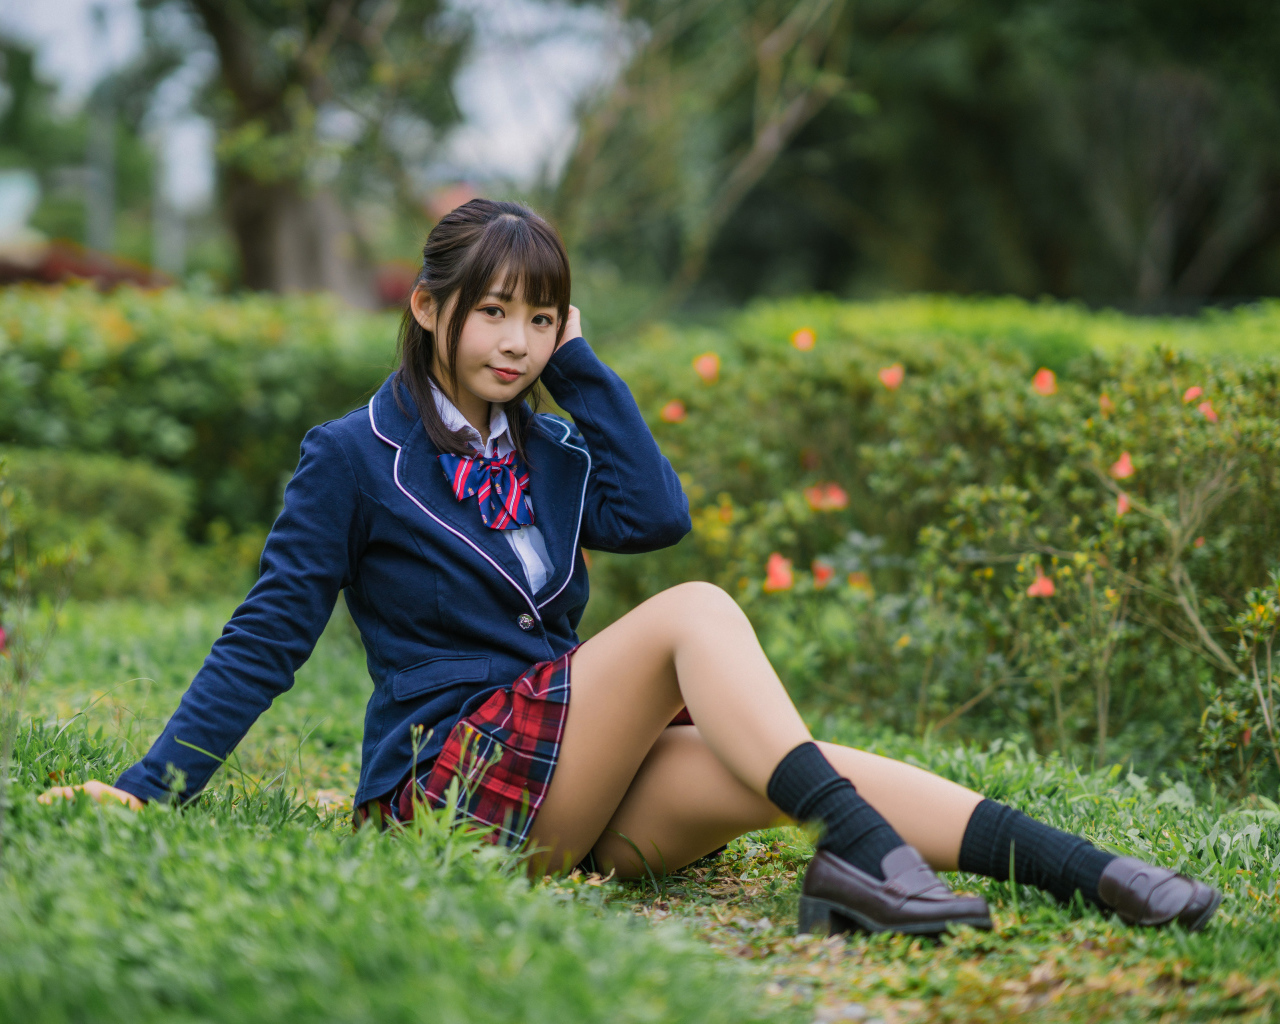 Азиатская школьница сидит на траве